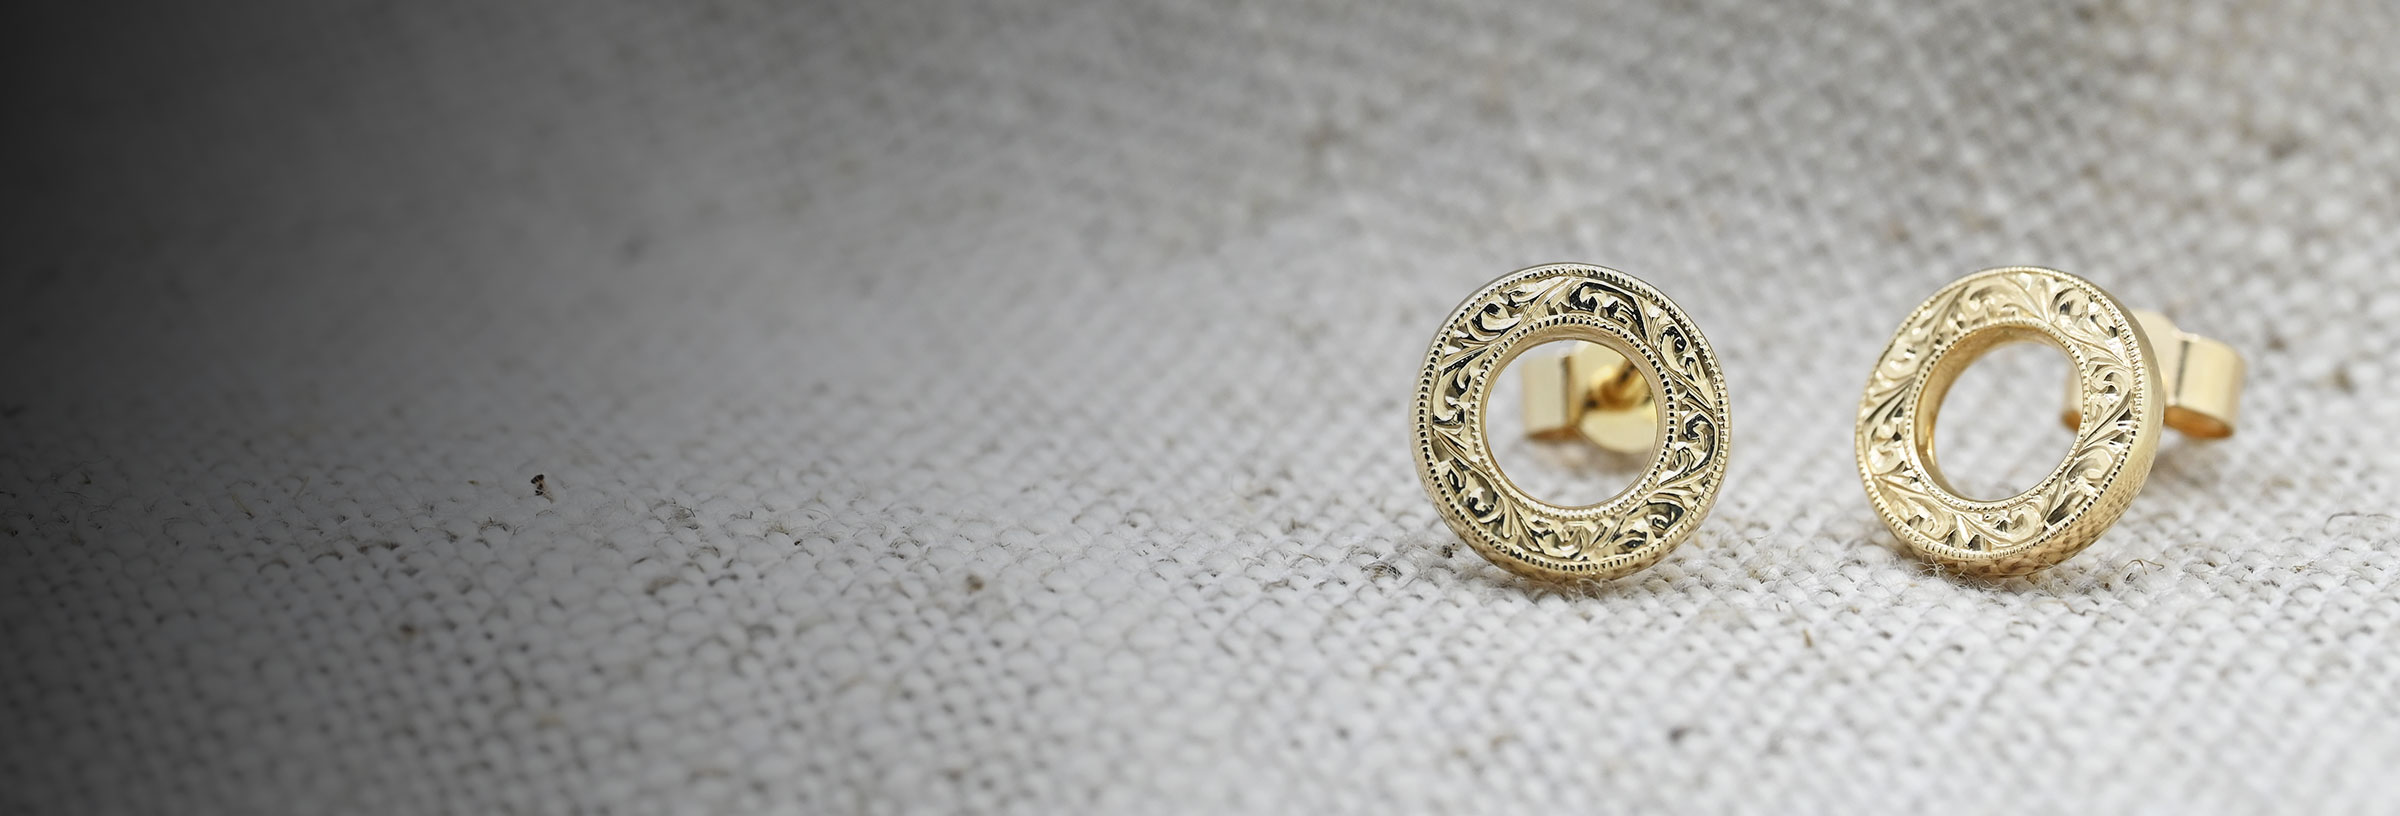 18k Yellow Gold Handmade Filigree Hoop Earrings From Italy – Exeter Jewelers